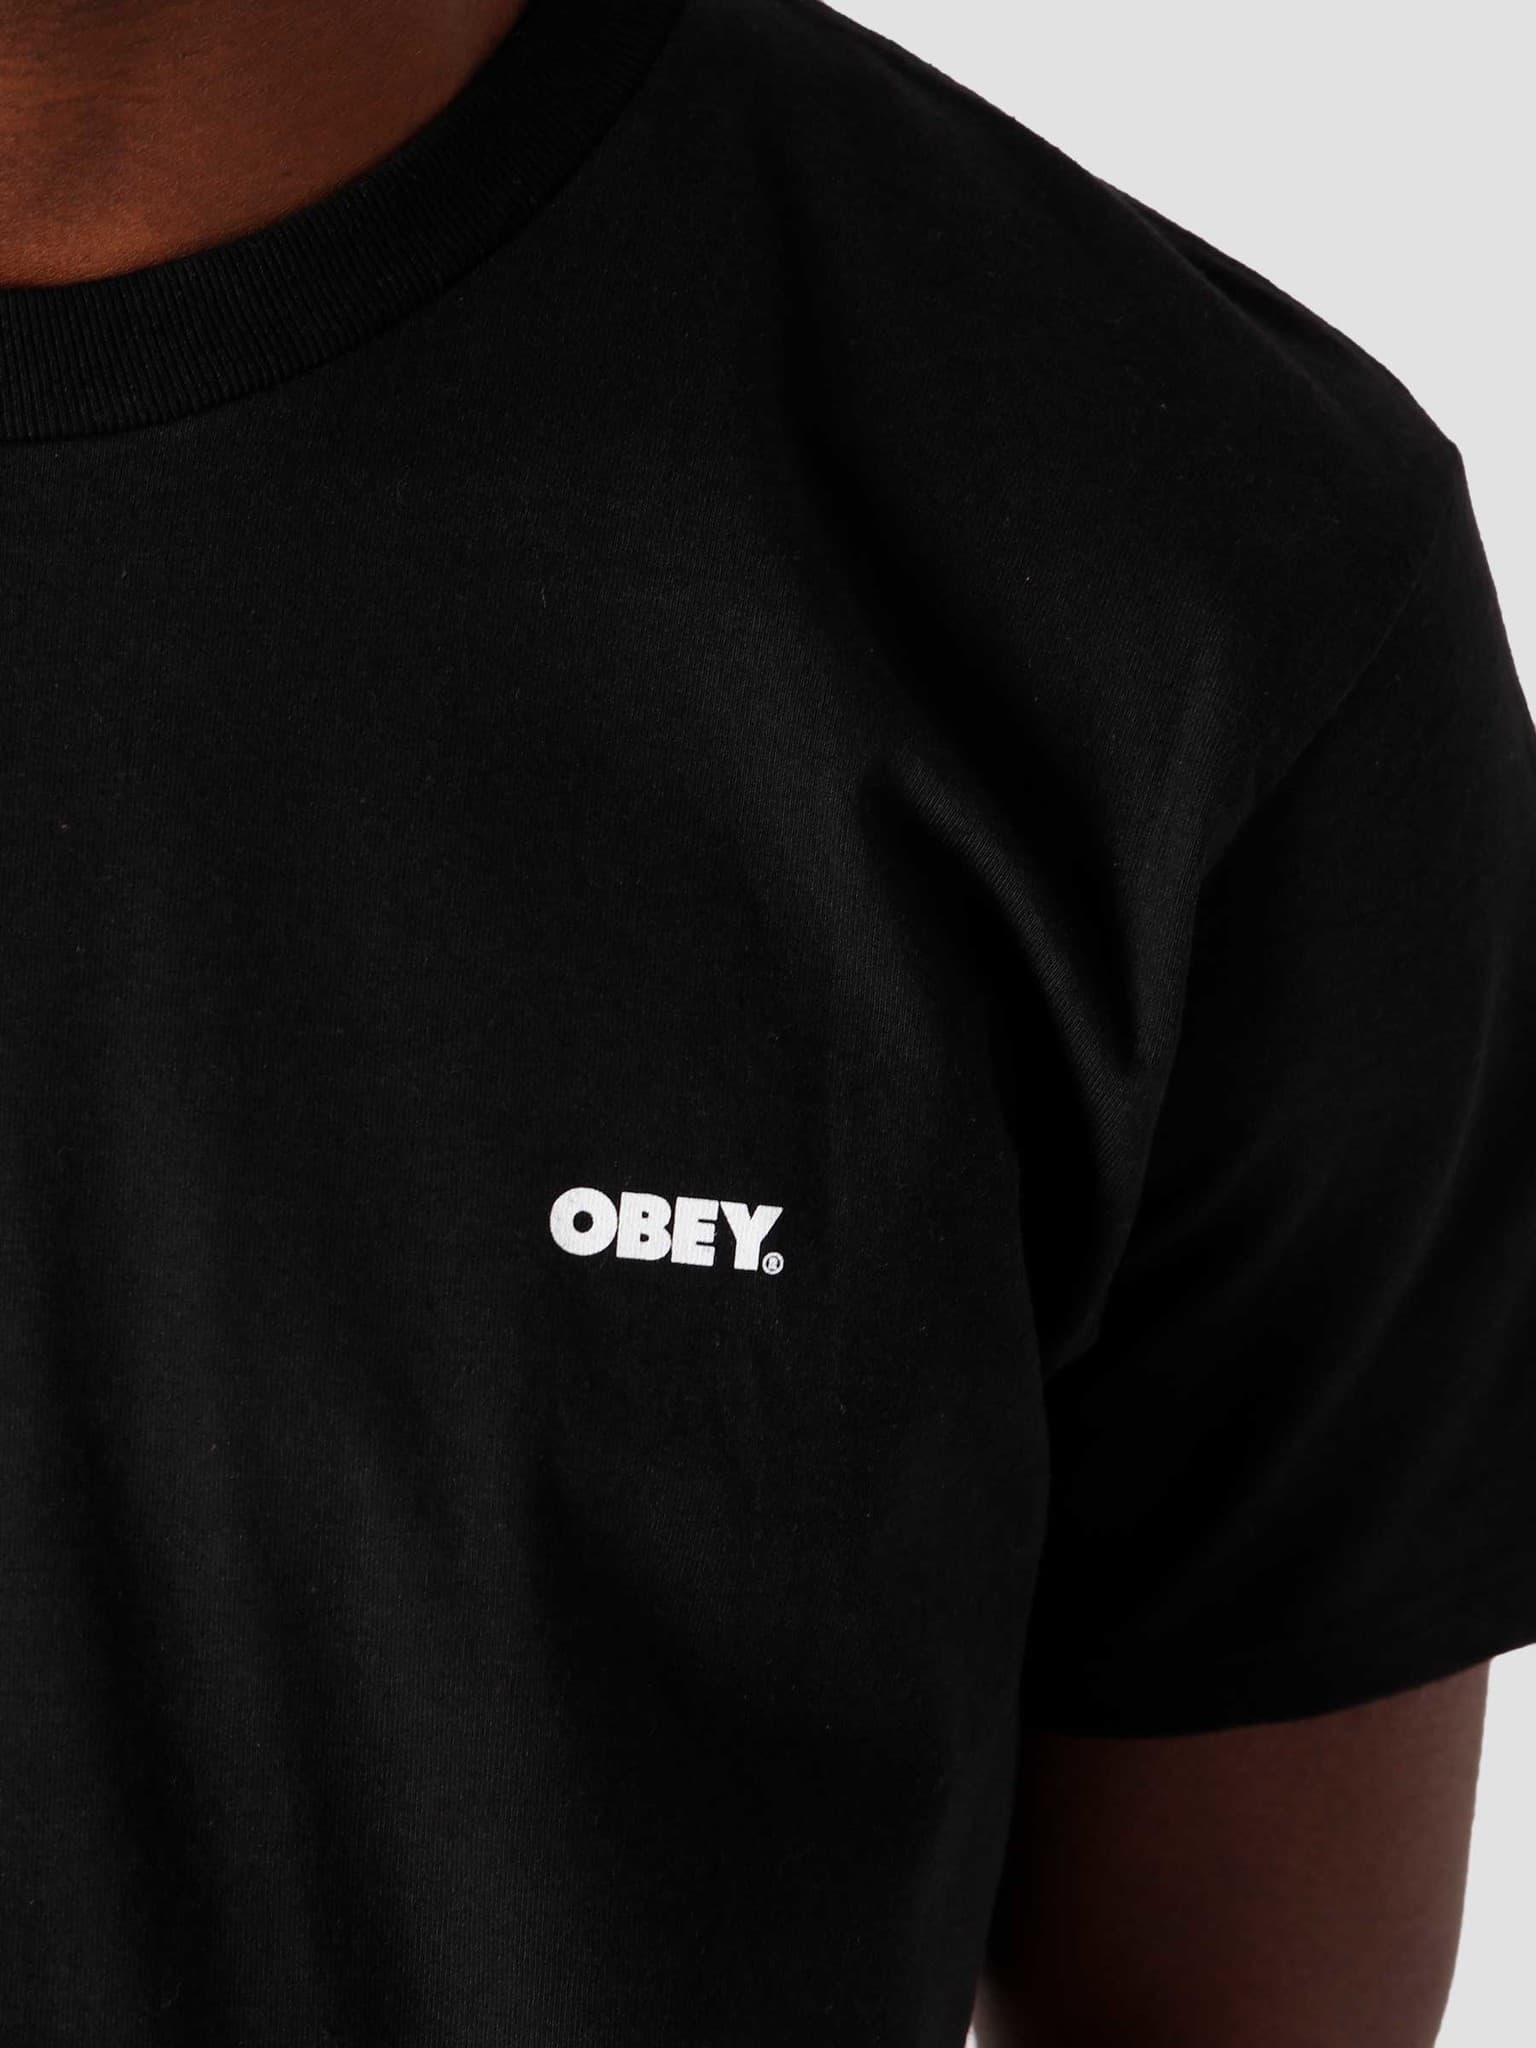 Obey Statue Icon T-Shirt Black 165262589-BLK